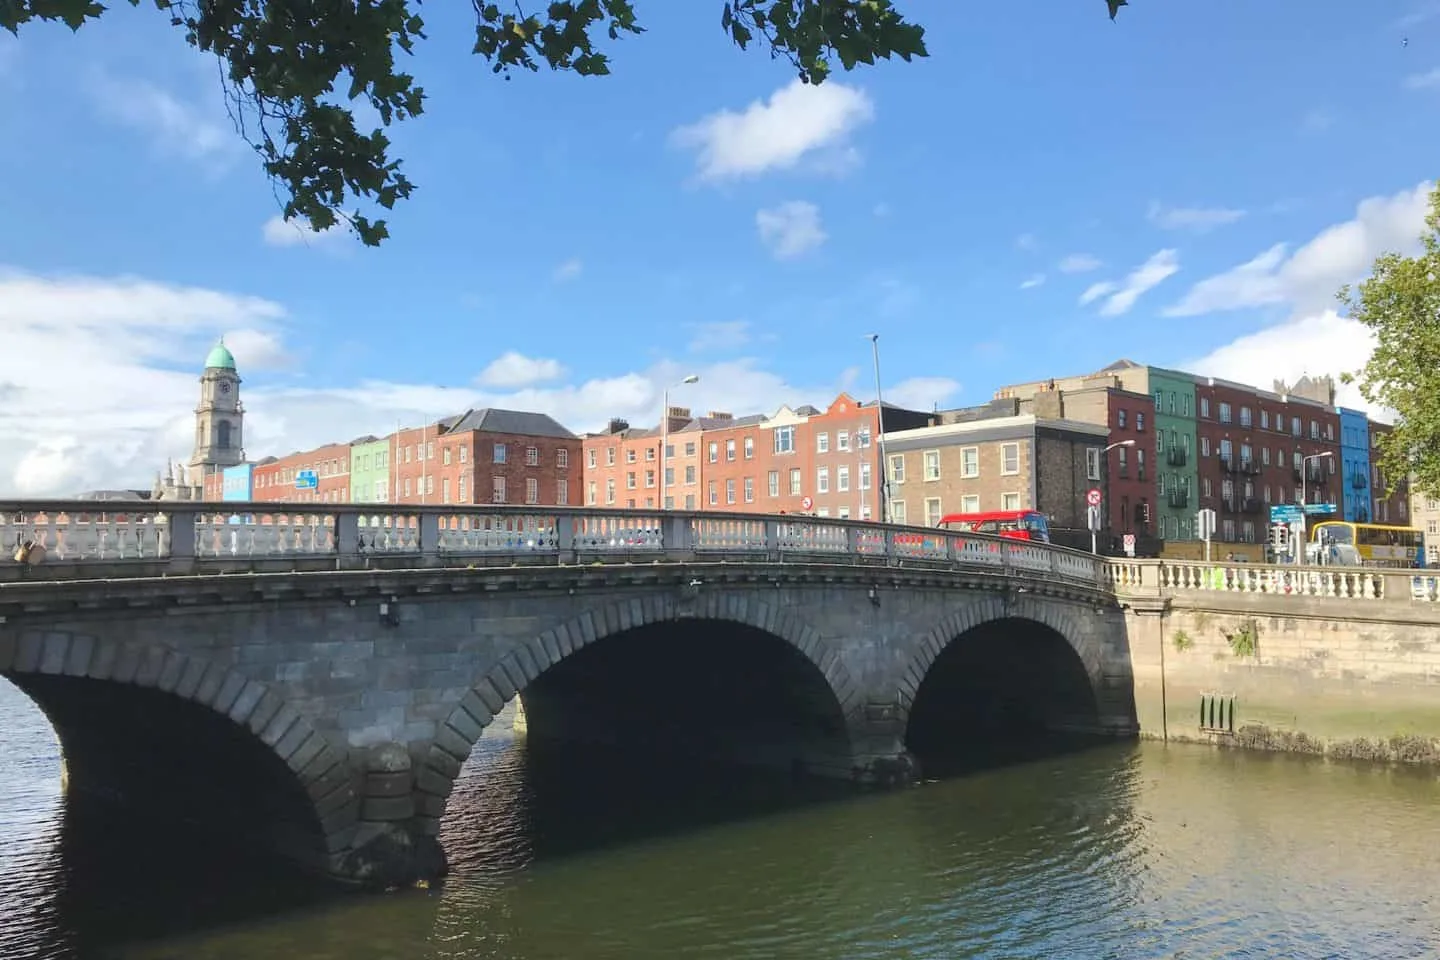 Dublin, Ireland is a very walkable city